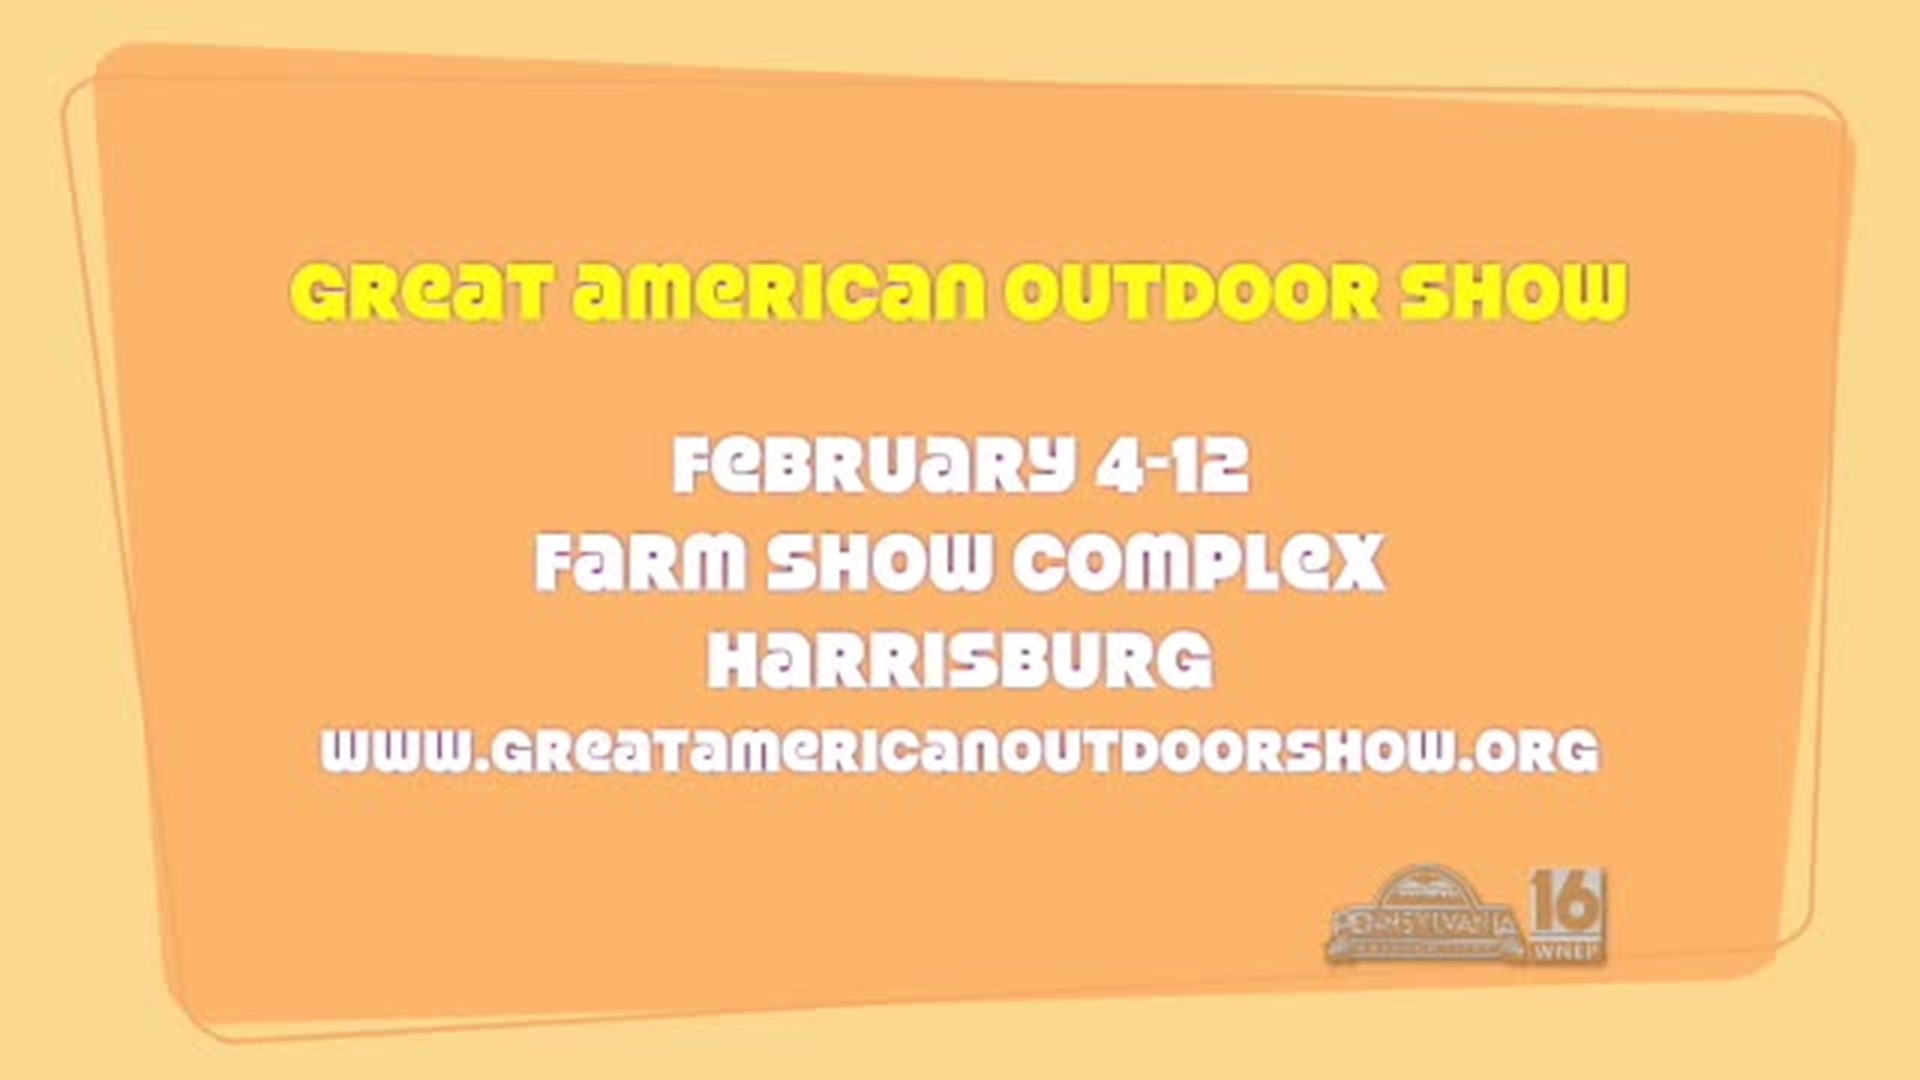 Great American Outdoor Show Ticket Giveaway